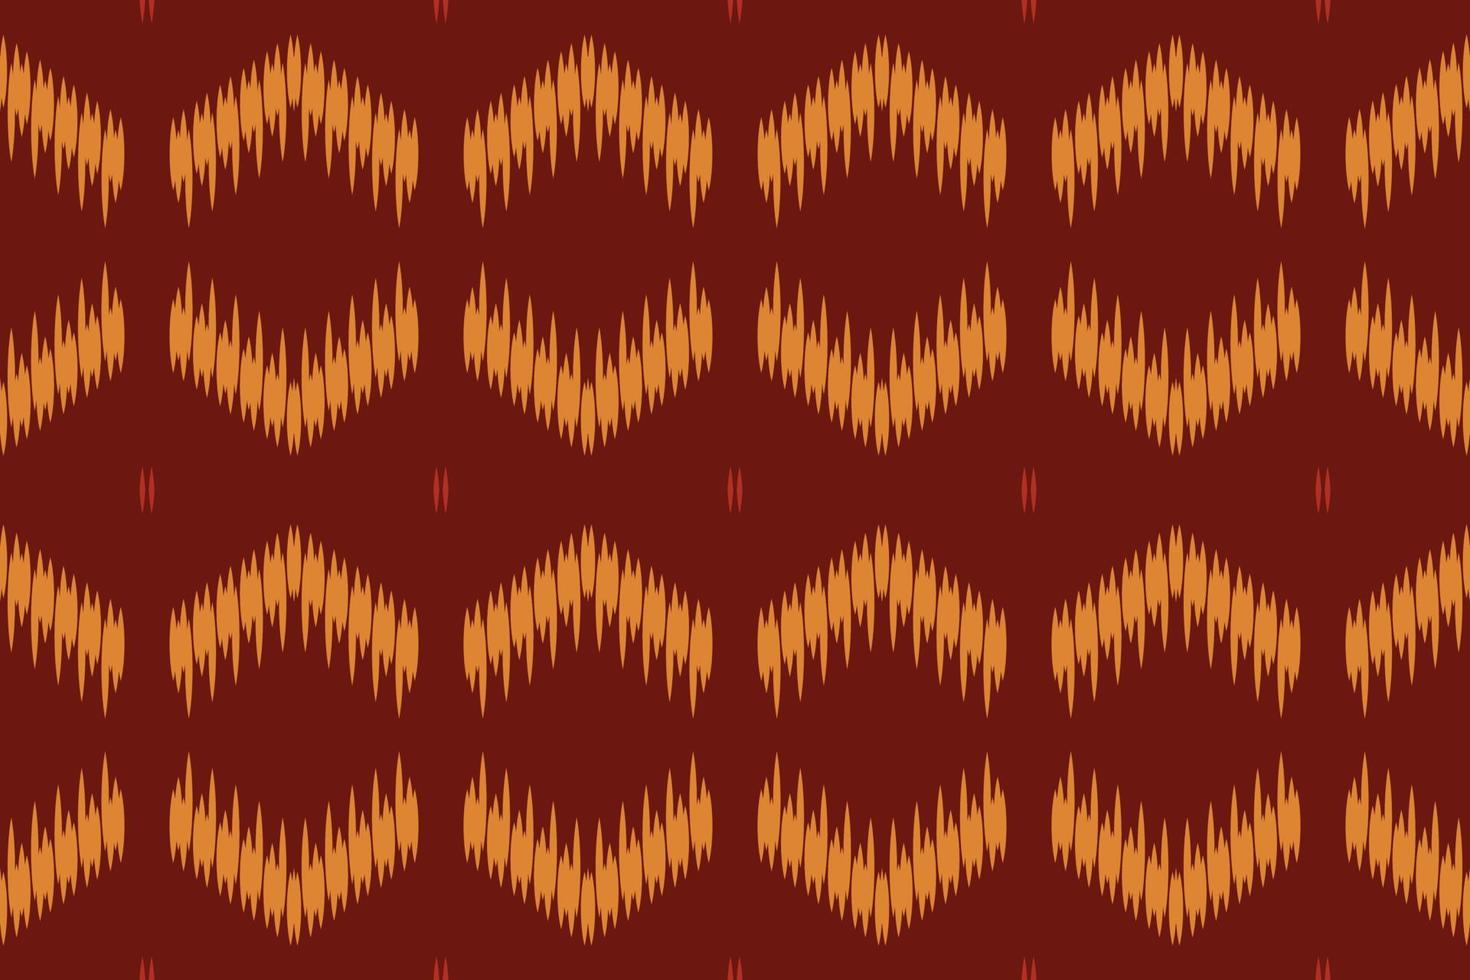 ikat imprime patrones tribales africanos sin costuras. étnico geométrico batik ikkat vector digital diseño textil para estampados tela sari mughal cepillo símbolo franjas textura kurti kurtis kurtas